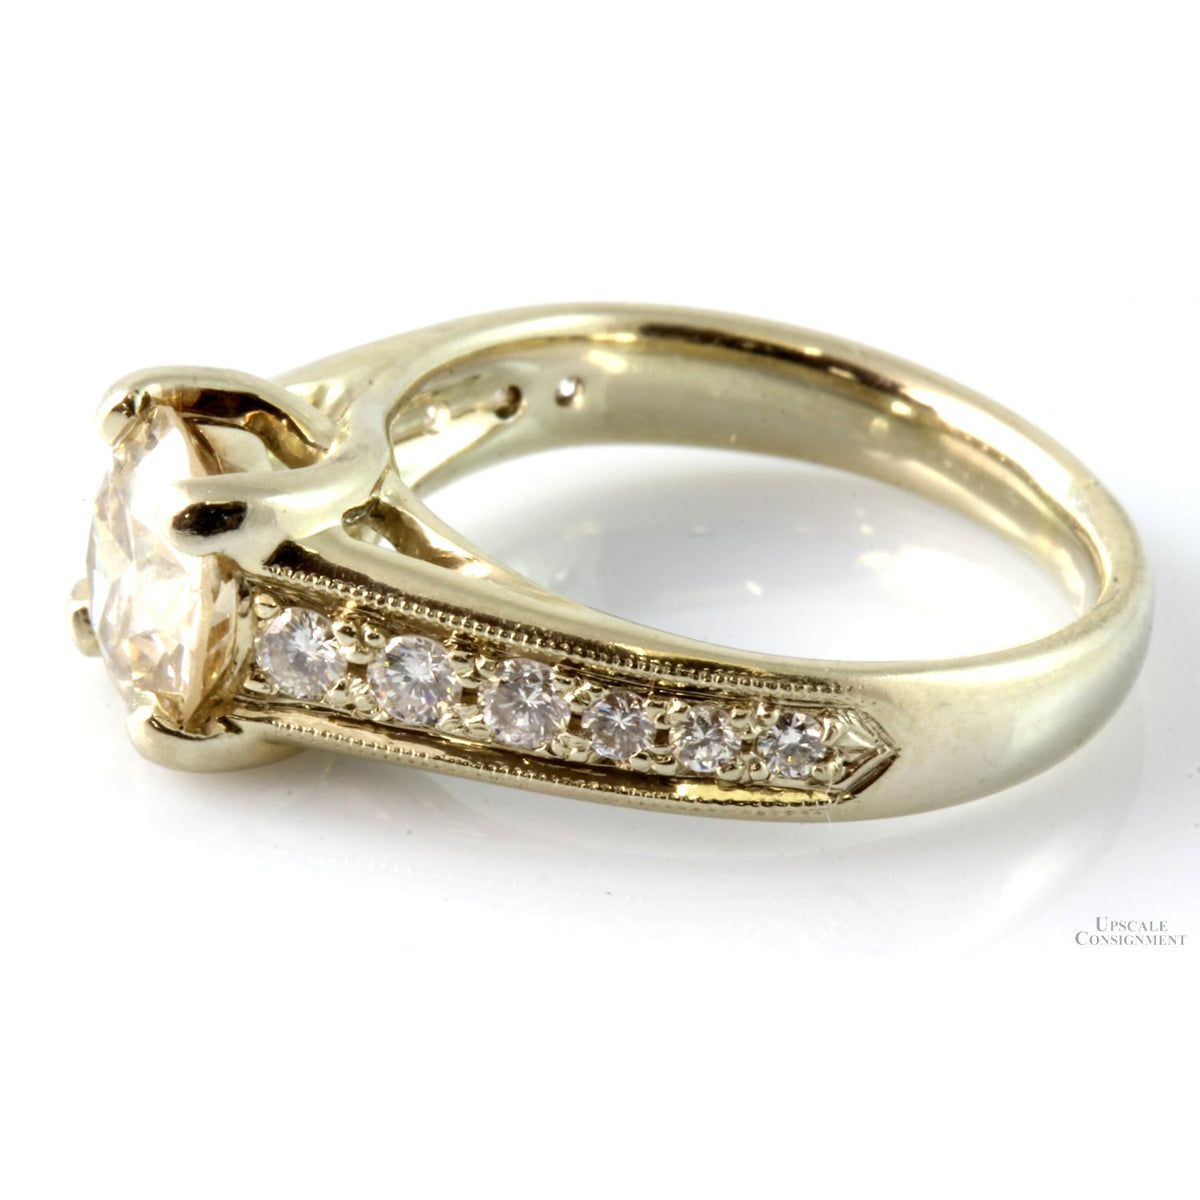 1.50ct Light Champagne Diamond 18K Gold 1.81ctw Diamond Ring